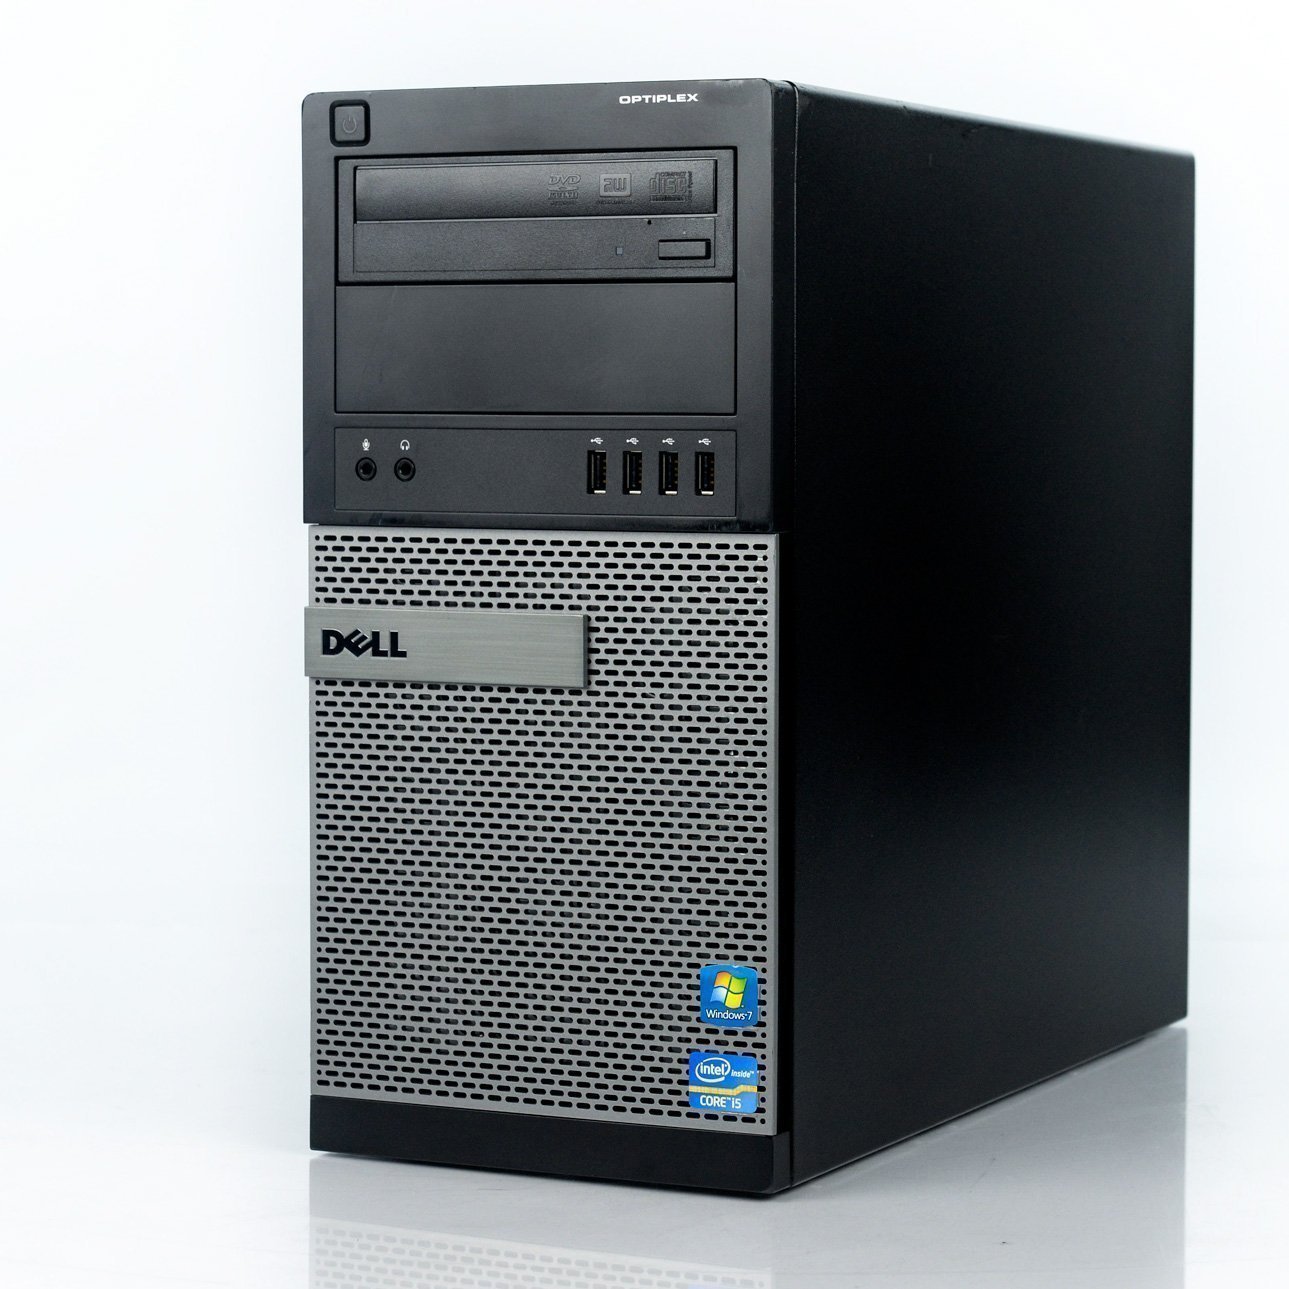 Dell Optiplex 9020 Desktop Tower PC, Intel Quad Core i5 (3.20GHz) Processor, 16GB RAM, 2TB Hard Drive, Windows 10 Professional, DVD, HDMI, Bluetooth, Keyboard, Mouse, WiFi (Renewed)